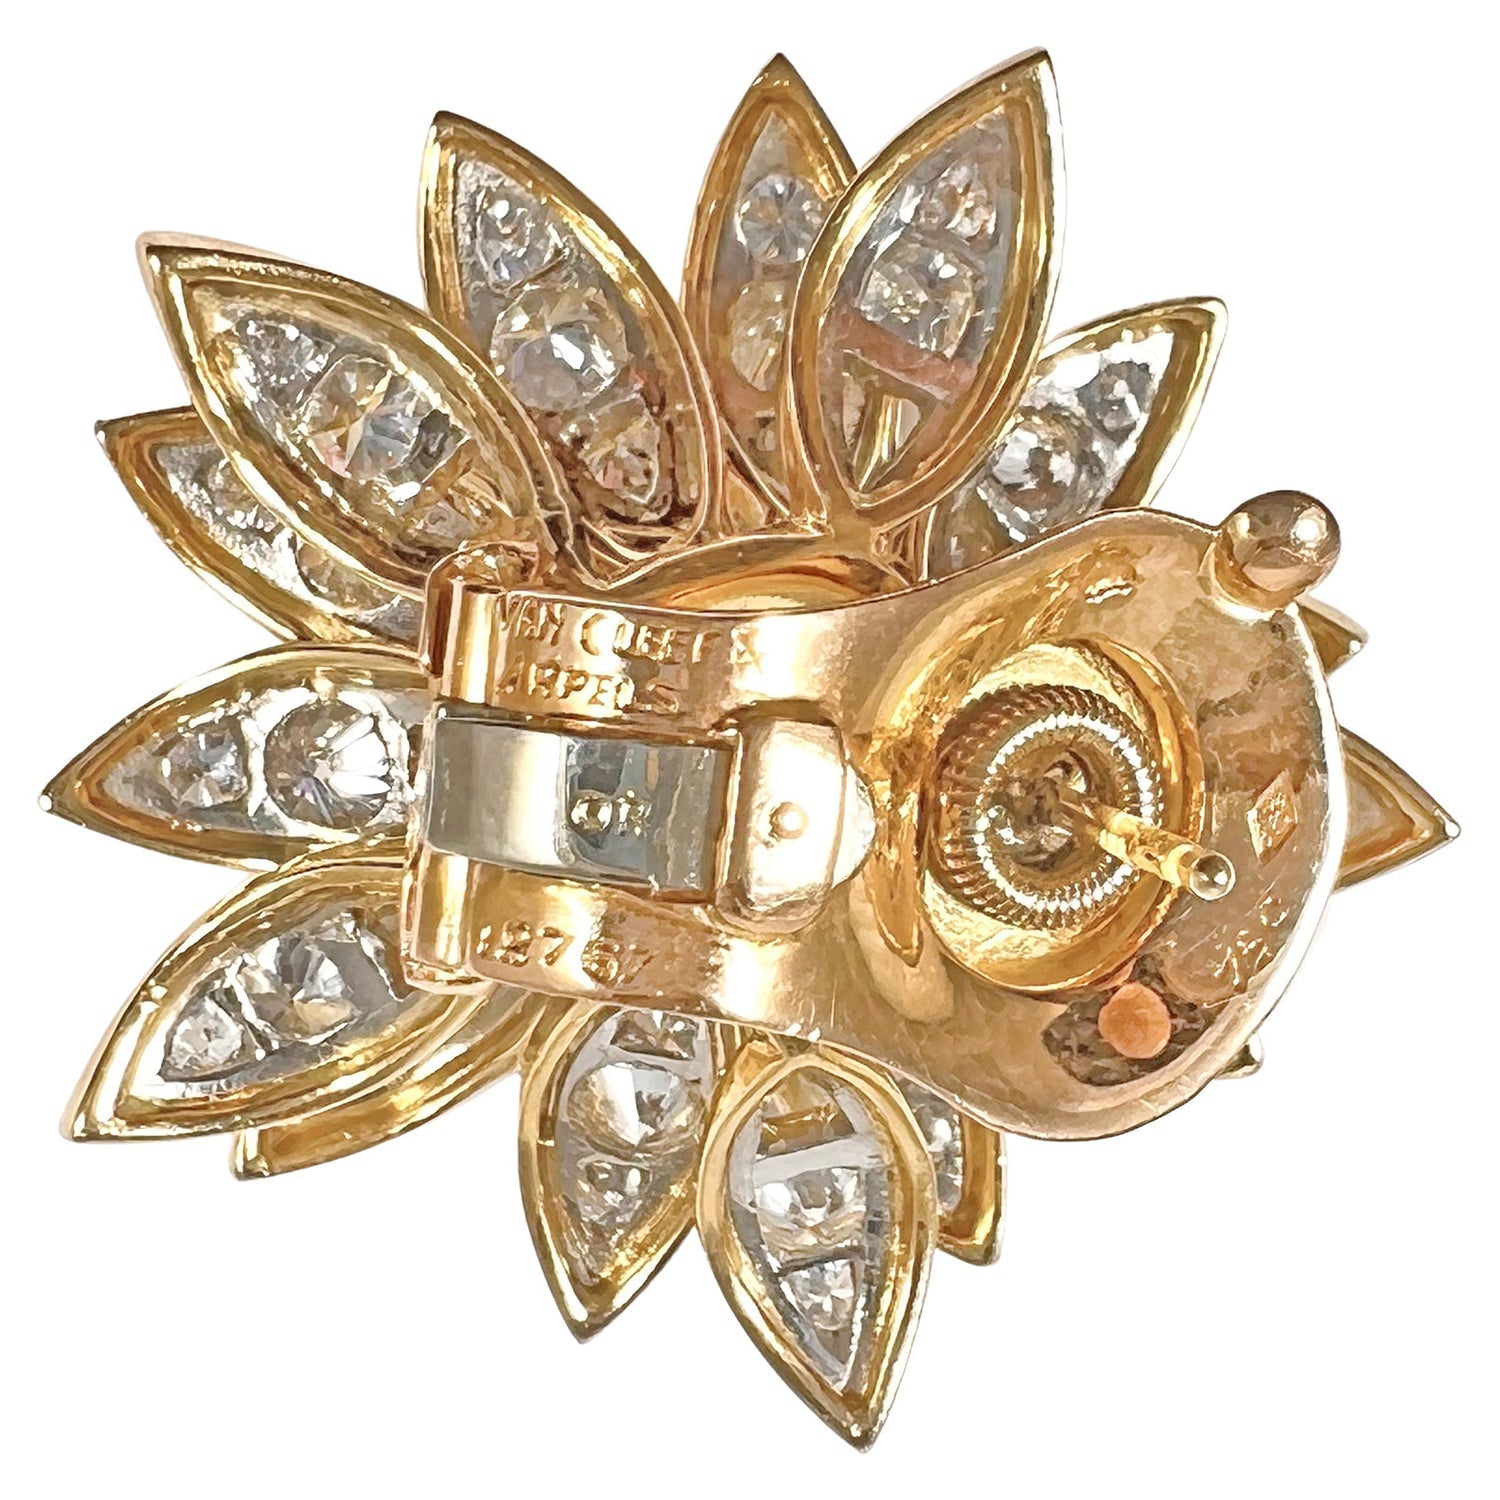 Lotus Between the Finger ring 18K white gold, Diamond - Van Cleef & Arpels